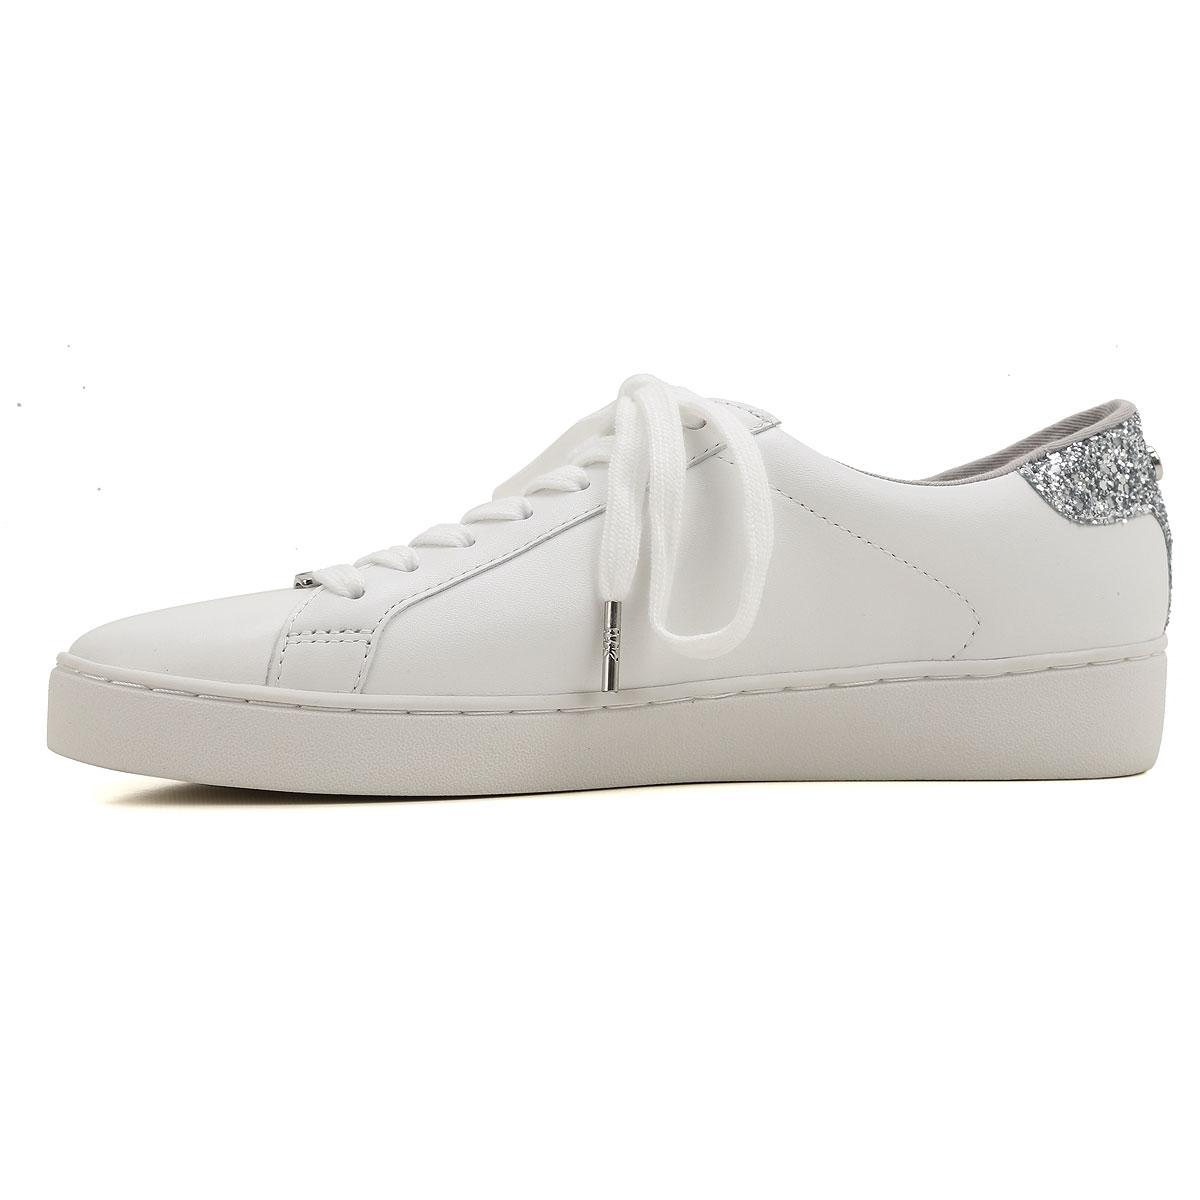 Michael Kors Sneakers For Women On Sale in White - Lyst